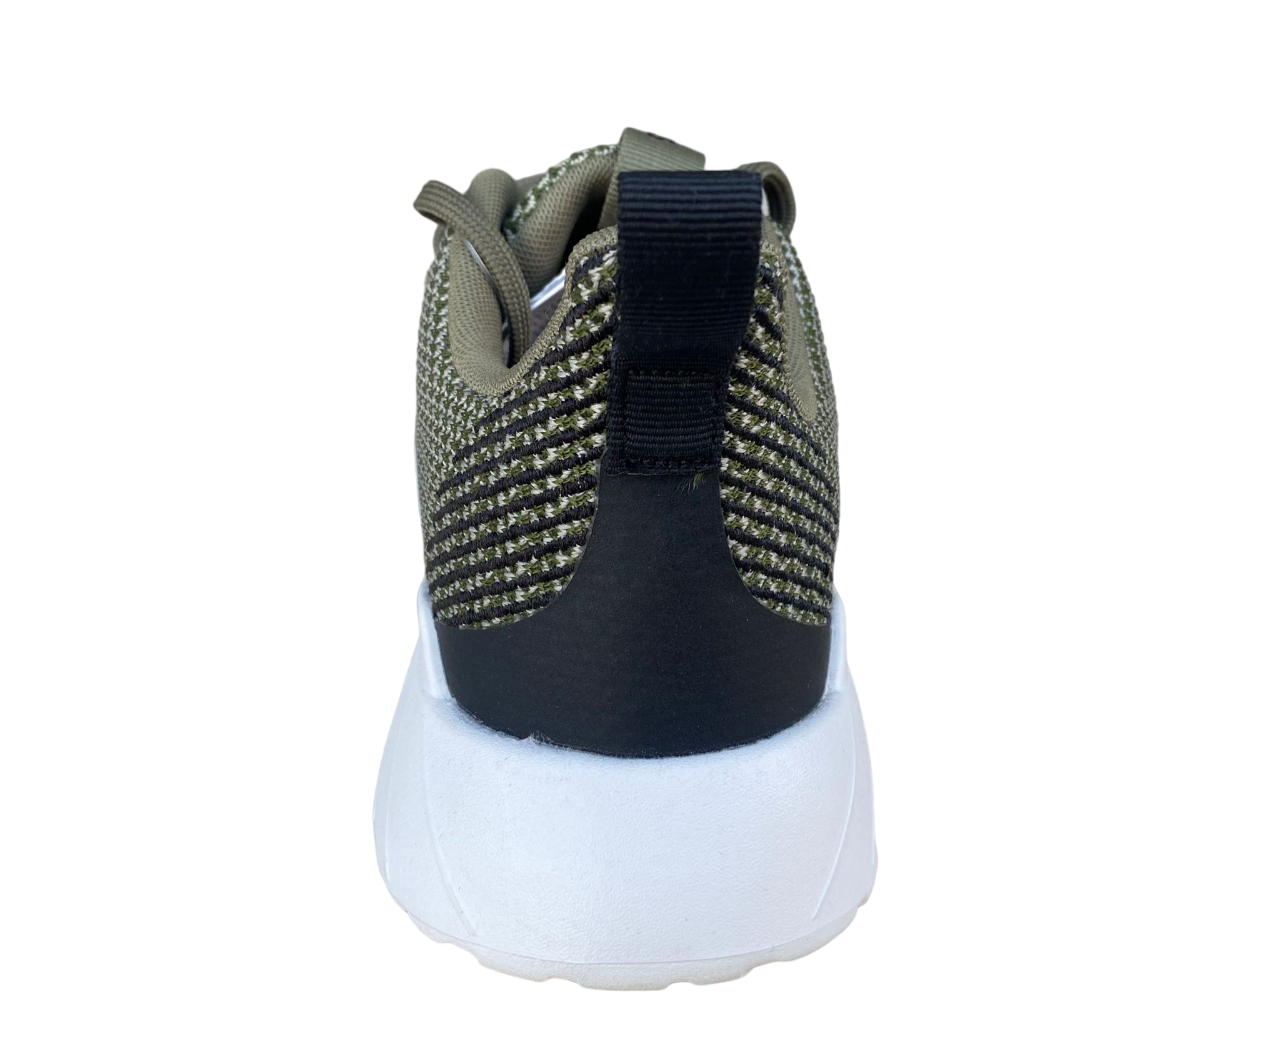 Adidas scarpa da corsa da uomo Questar Flow F36254 green